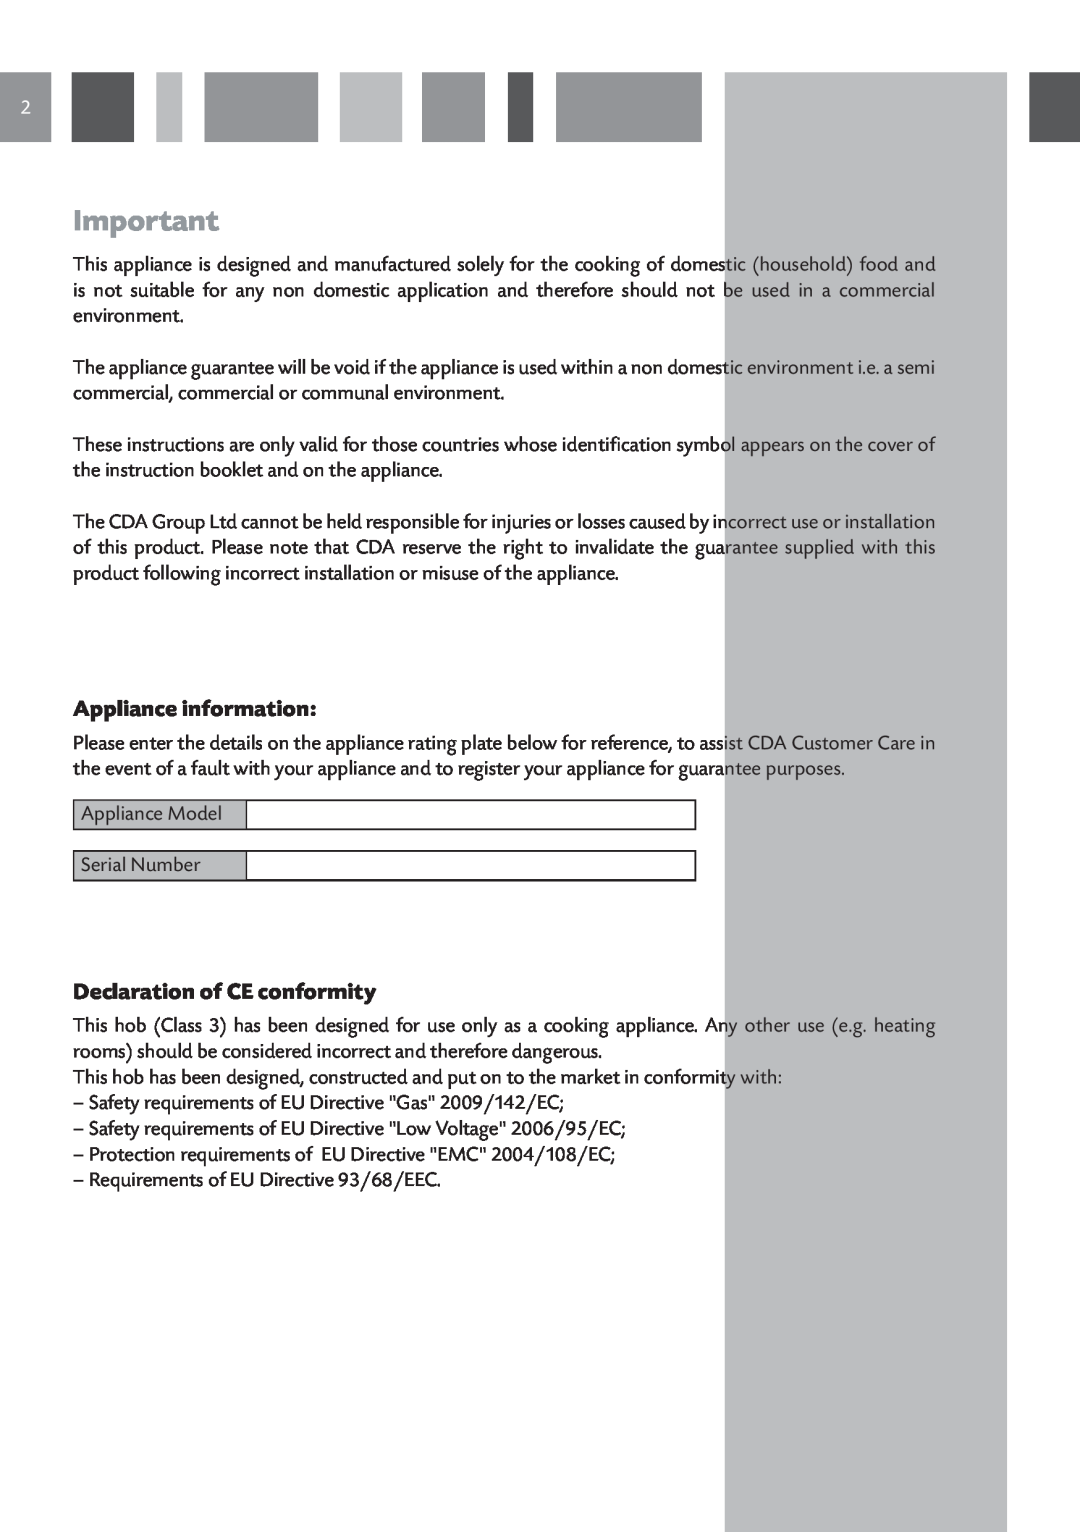 CDA HCG 931 manual Appliance information, Declaration of CE conformity 